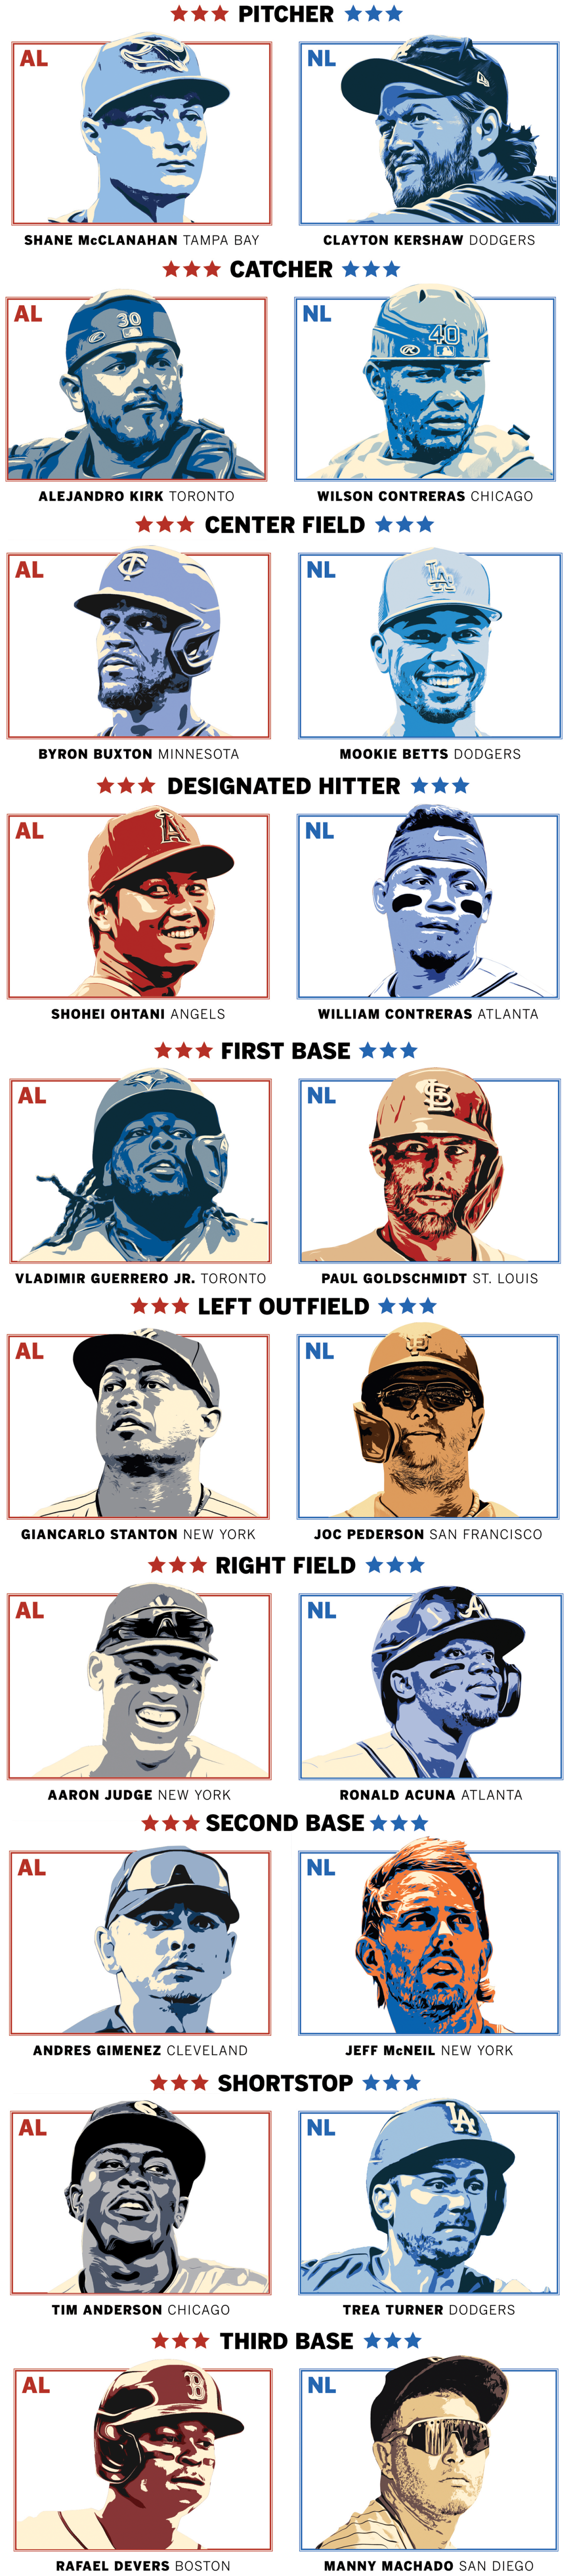 MLB All-Star Game starters.